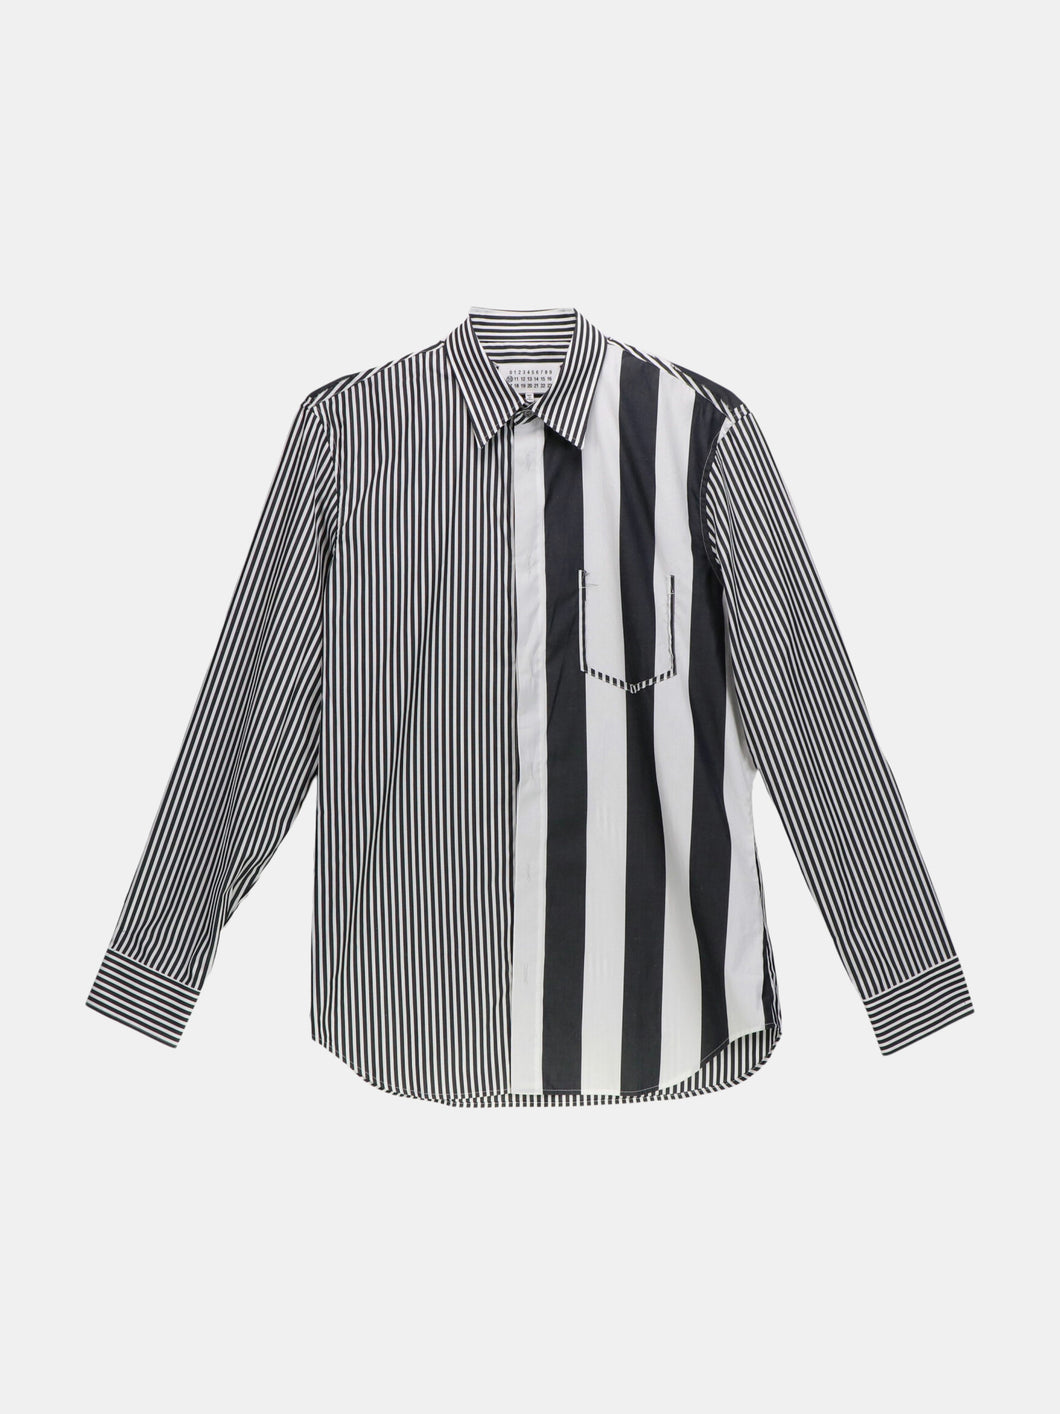 Maison Margiela Men's Black / White Multi Striped Dress Shirt Casual Button-Down - XXL